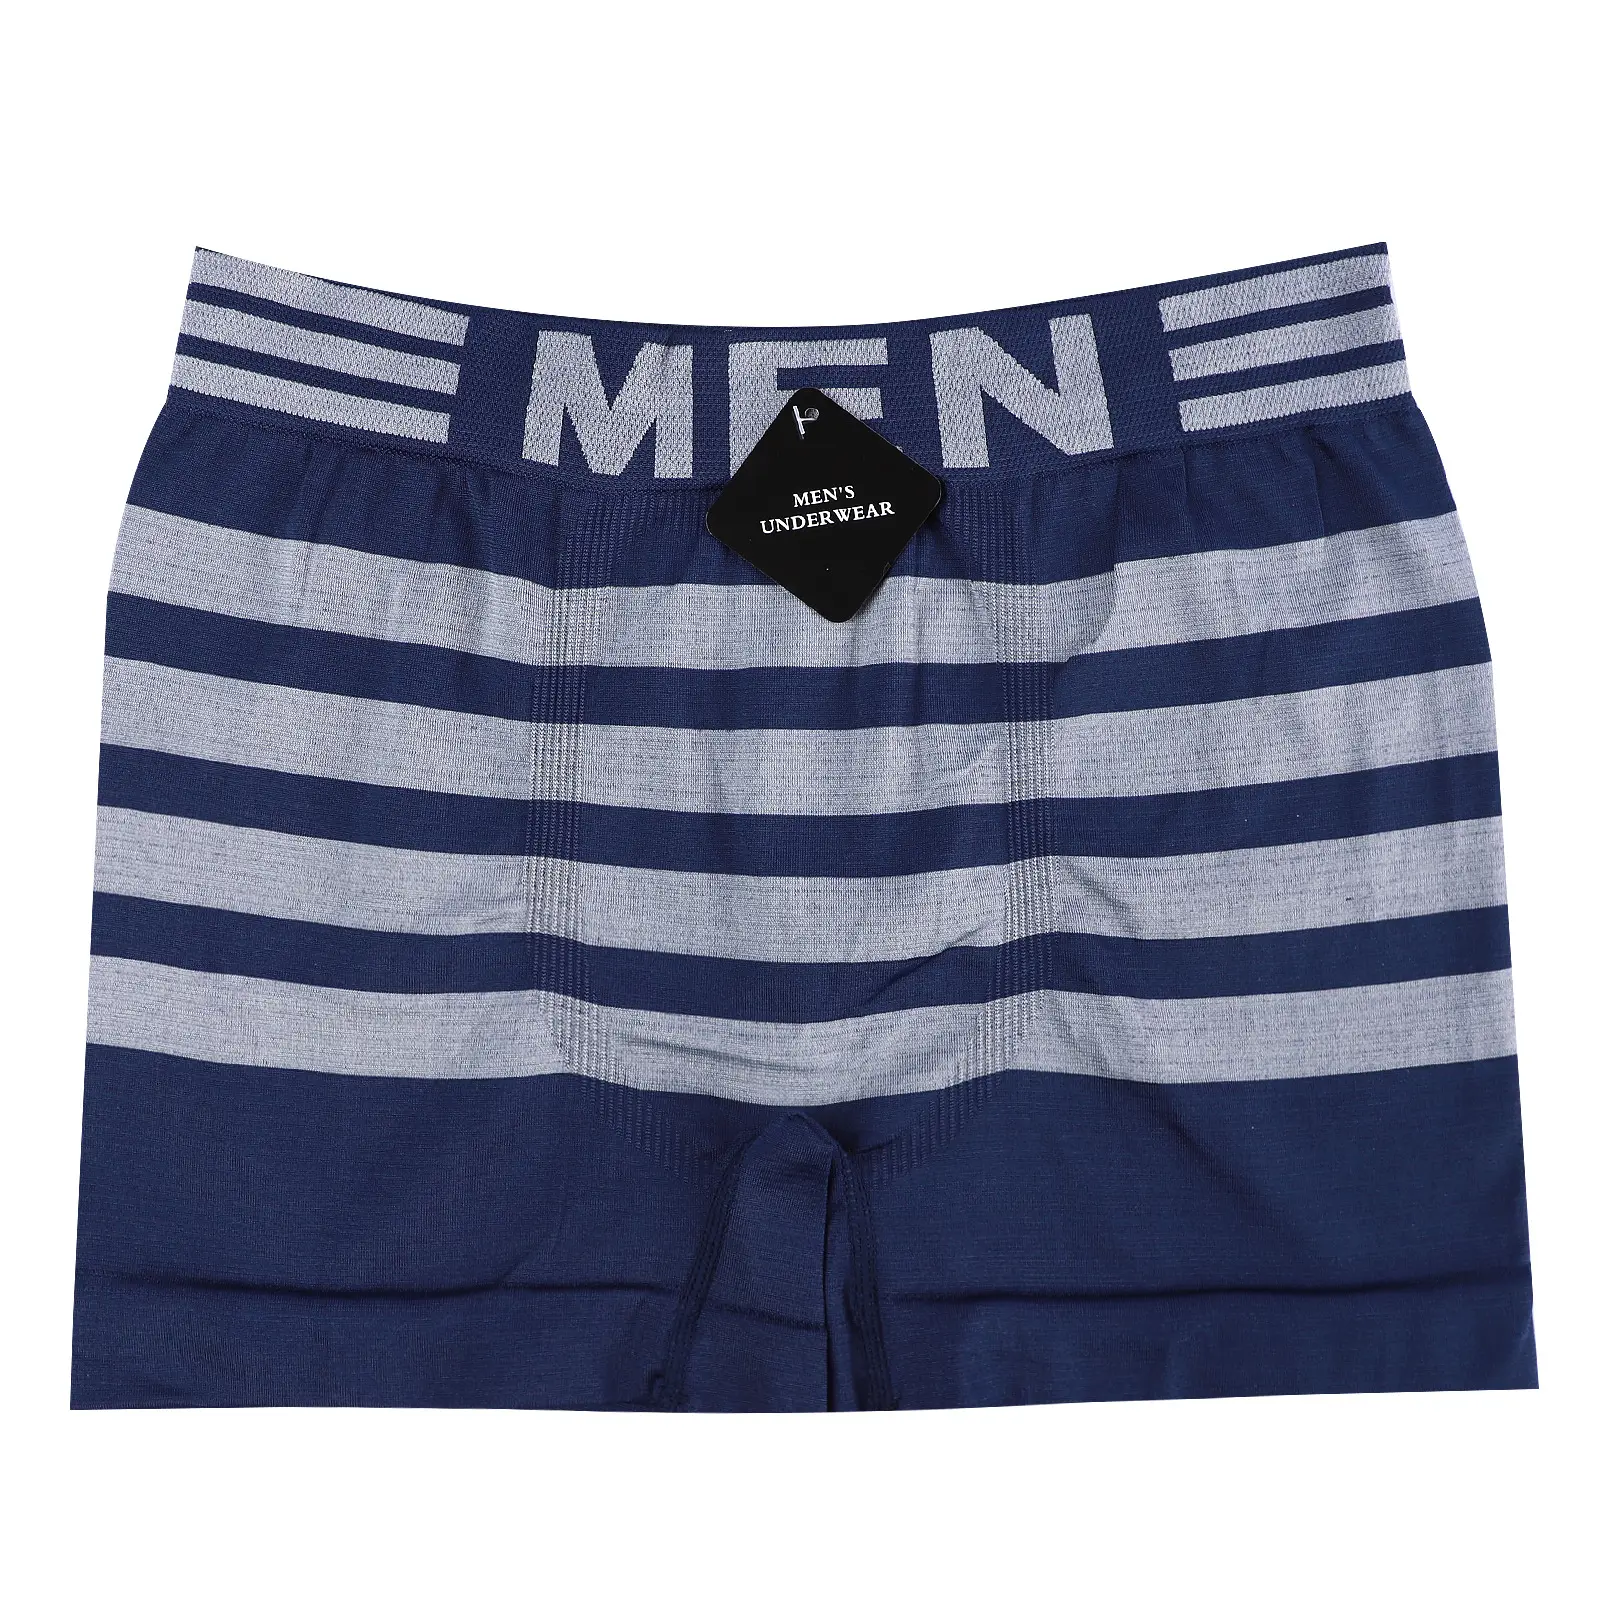 Seamless Men shorts Factory Custom Wholesale Men's Printed Letter Panties Comfortable Stretch Good Shorts boxer